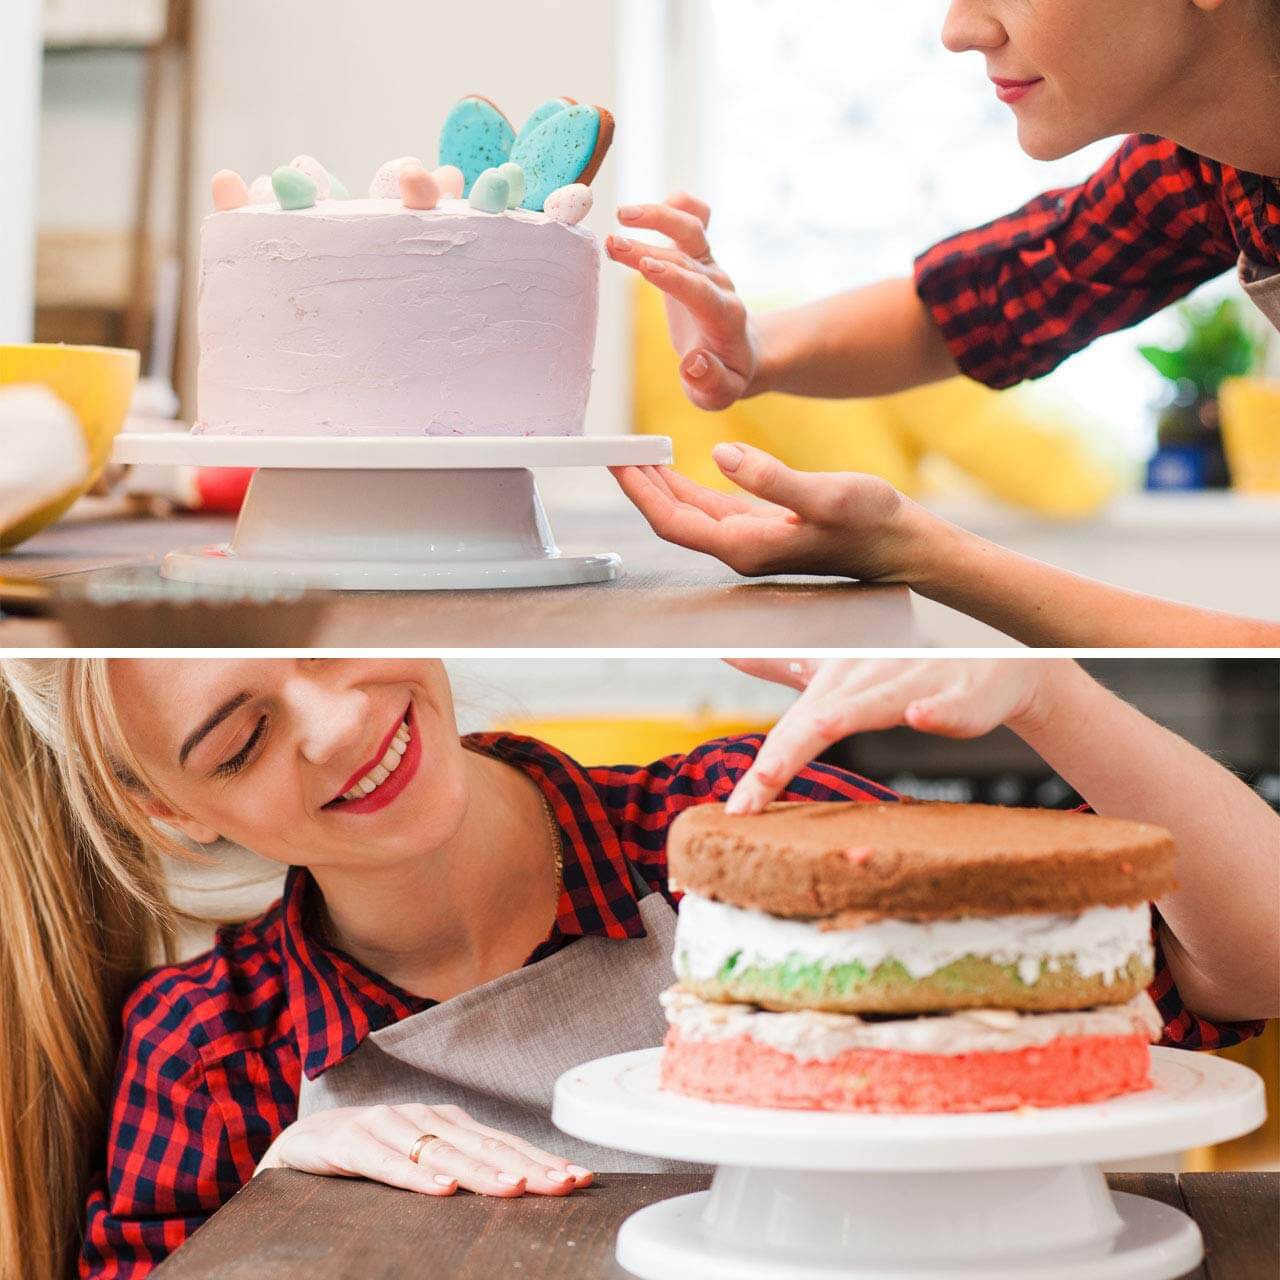 Kootek Cake Decorating Kits Supplies with Cake Turntable